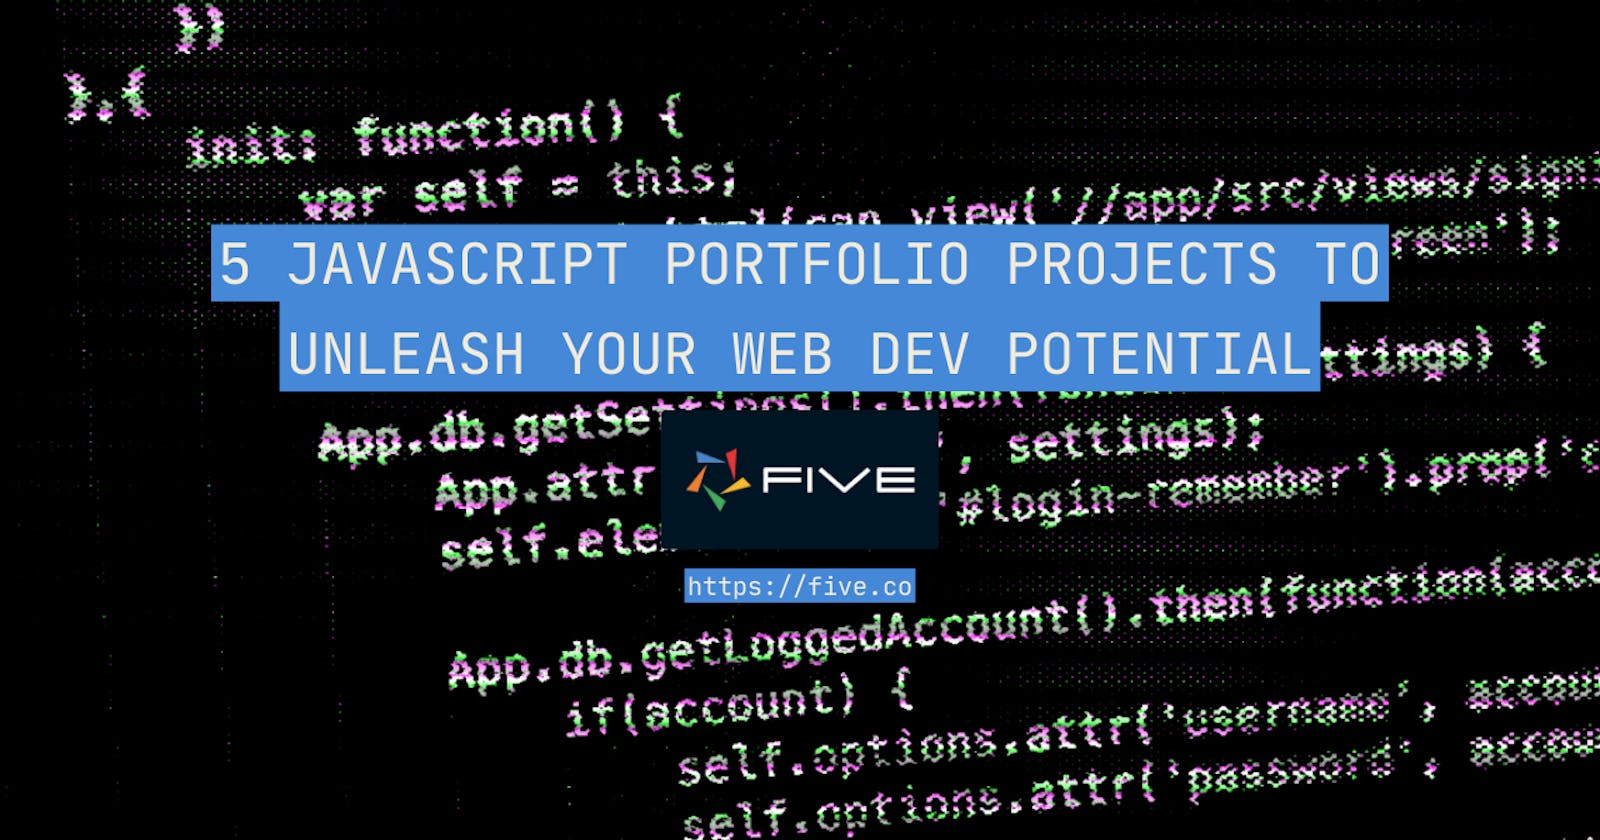 5 JavaScript Portfolio Projects to Unleash Your Web Dev Potential